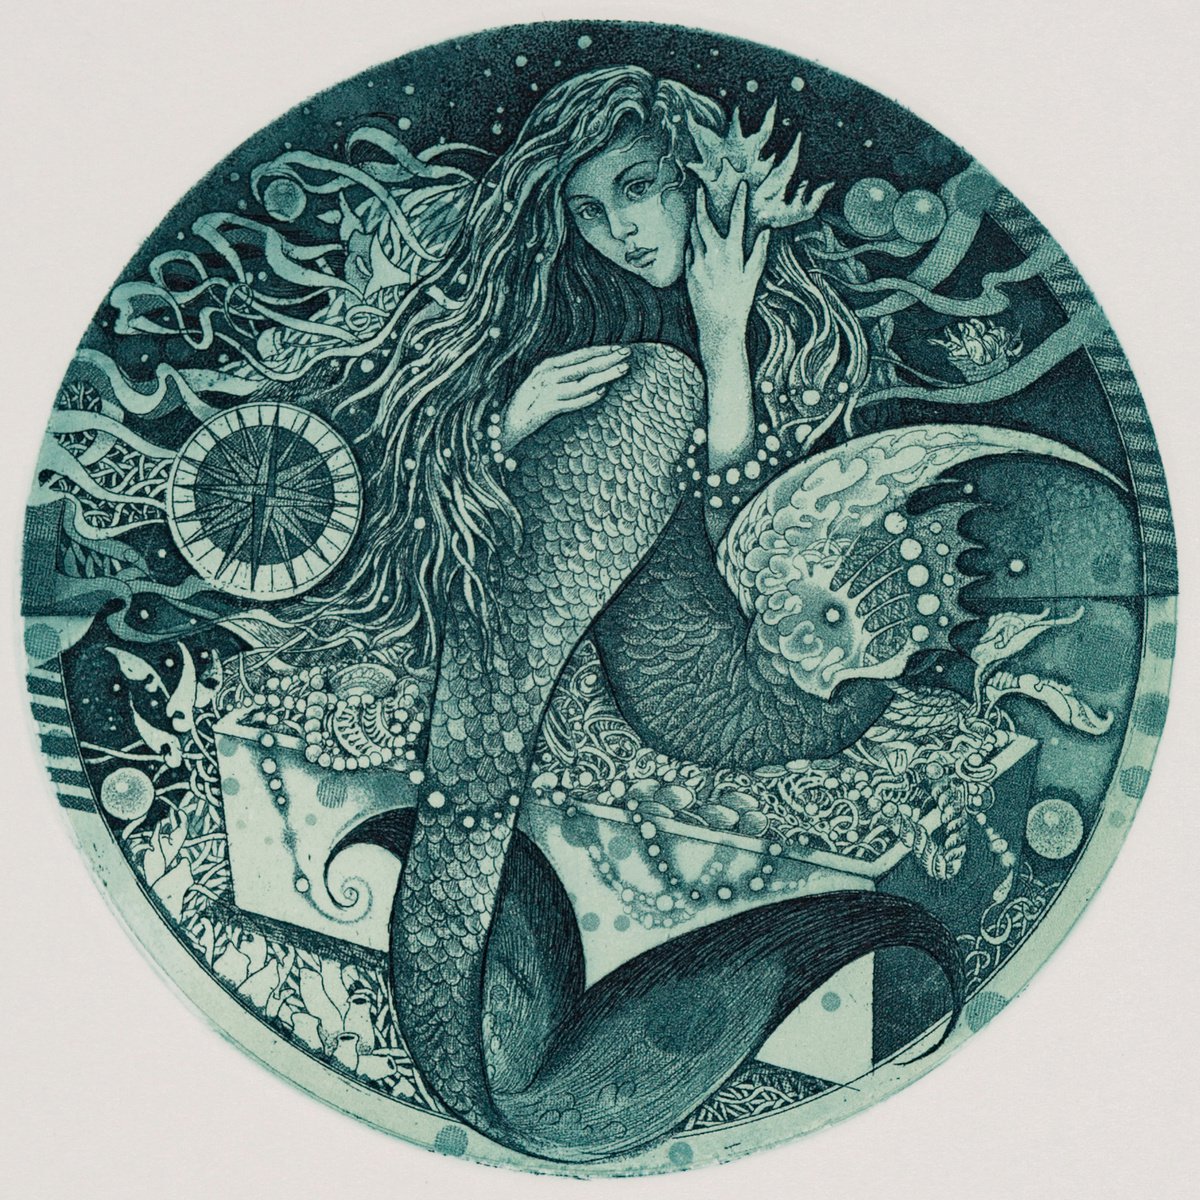 Treasure of Sirens by Vladislav Kvartalnyj